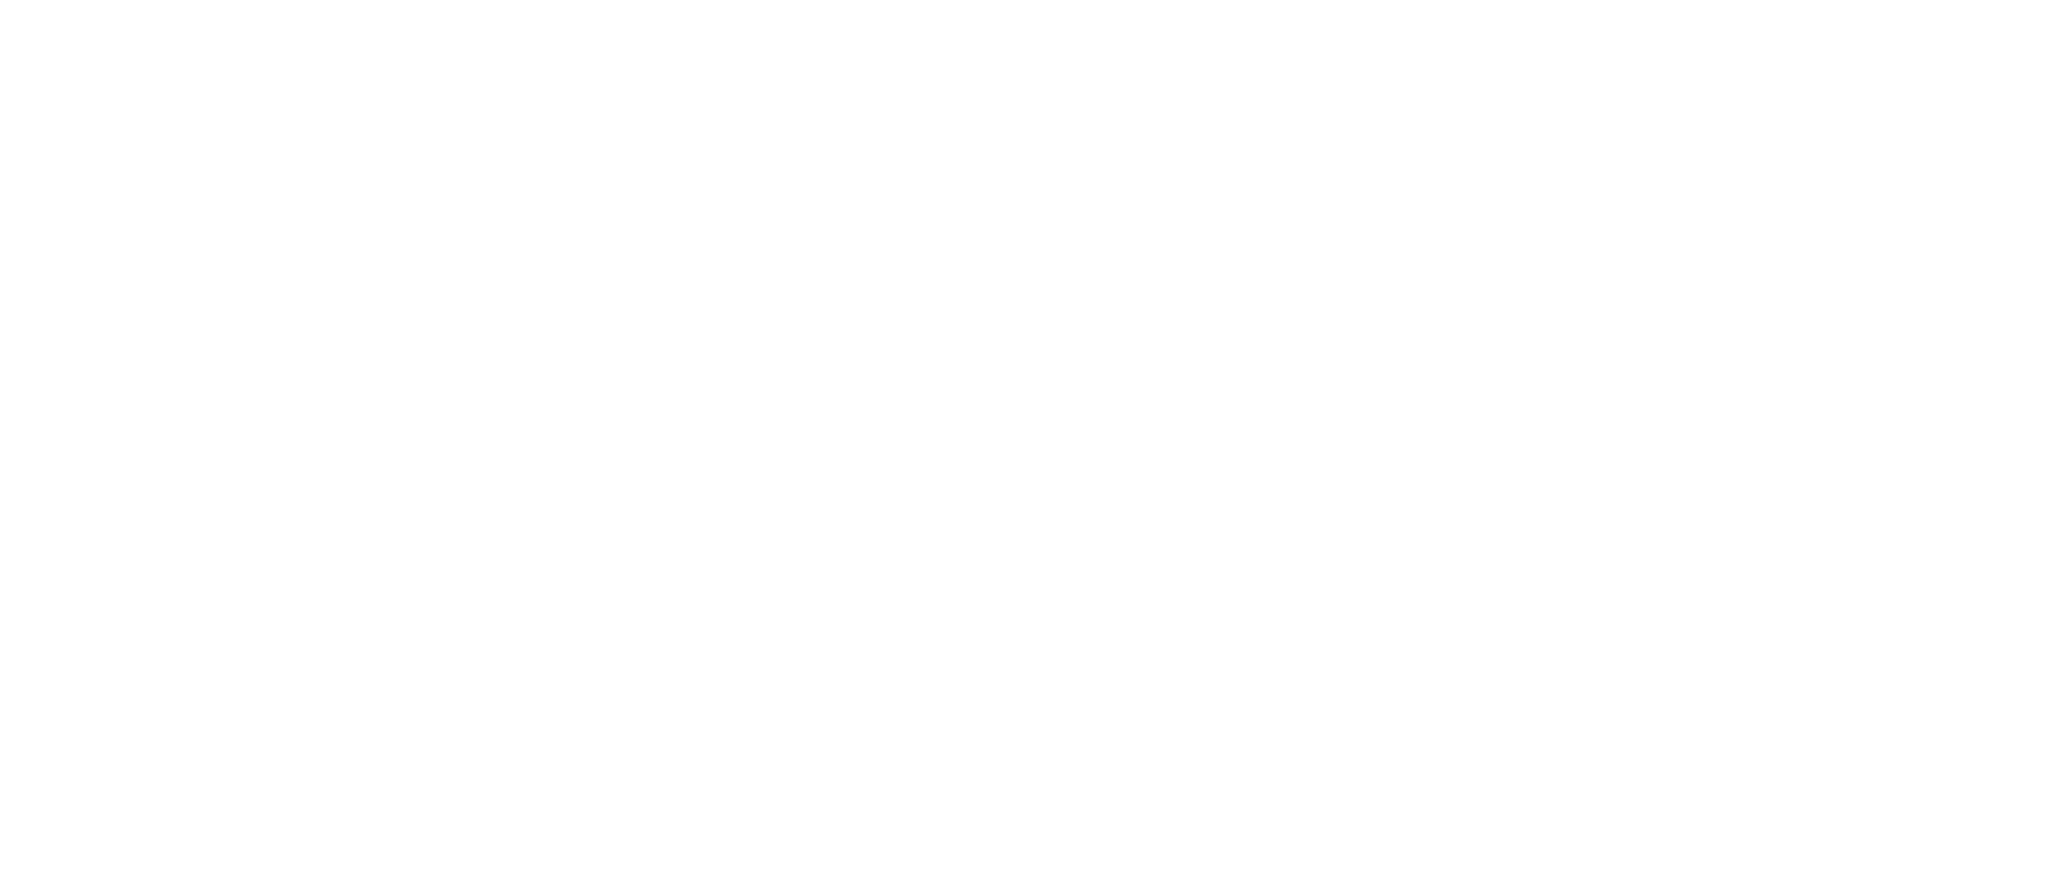 Spliid-logo-hvidt